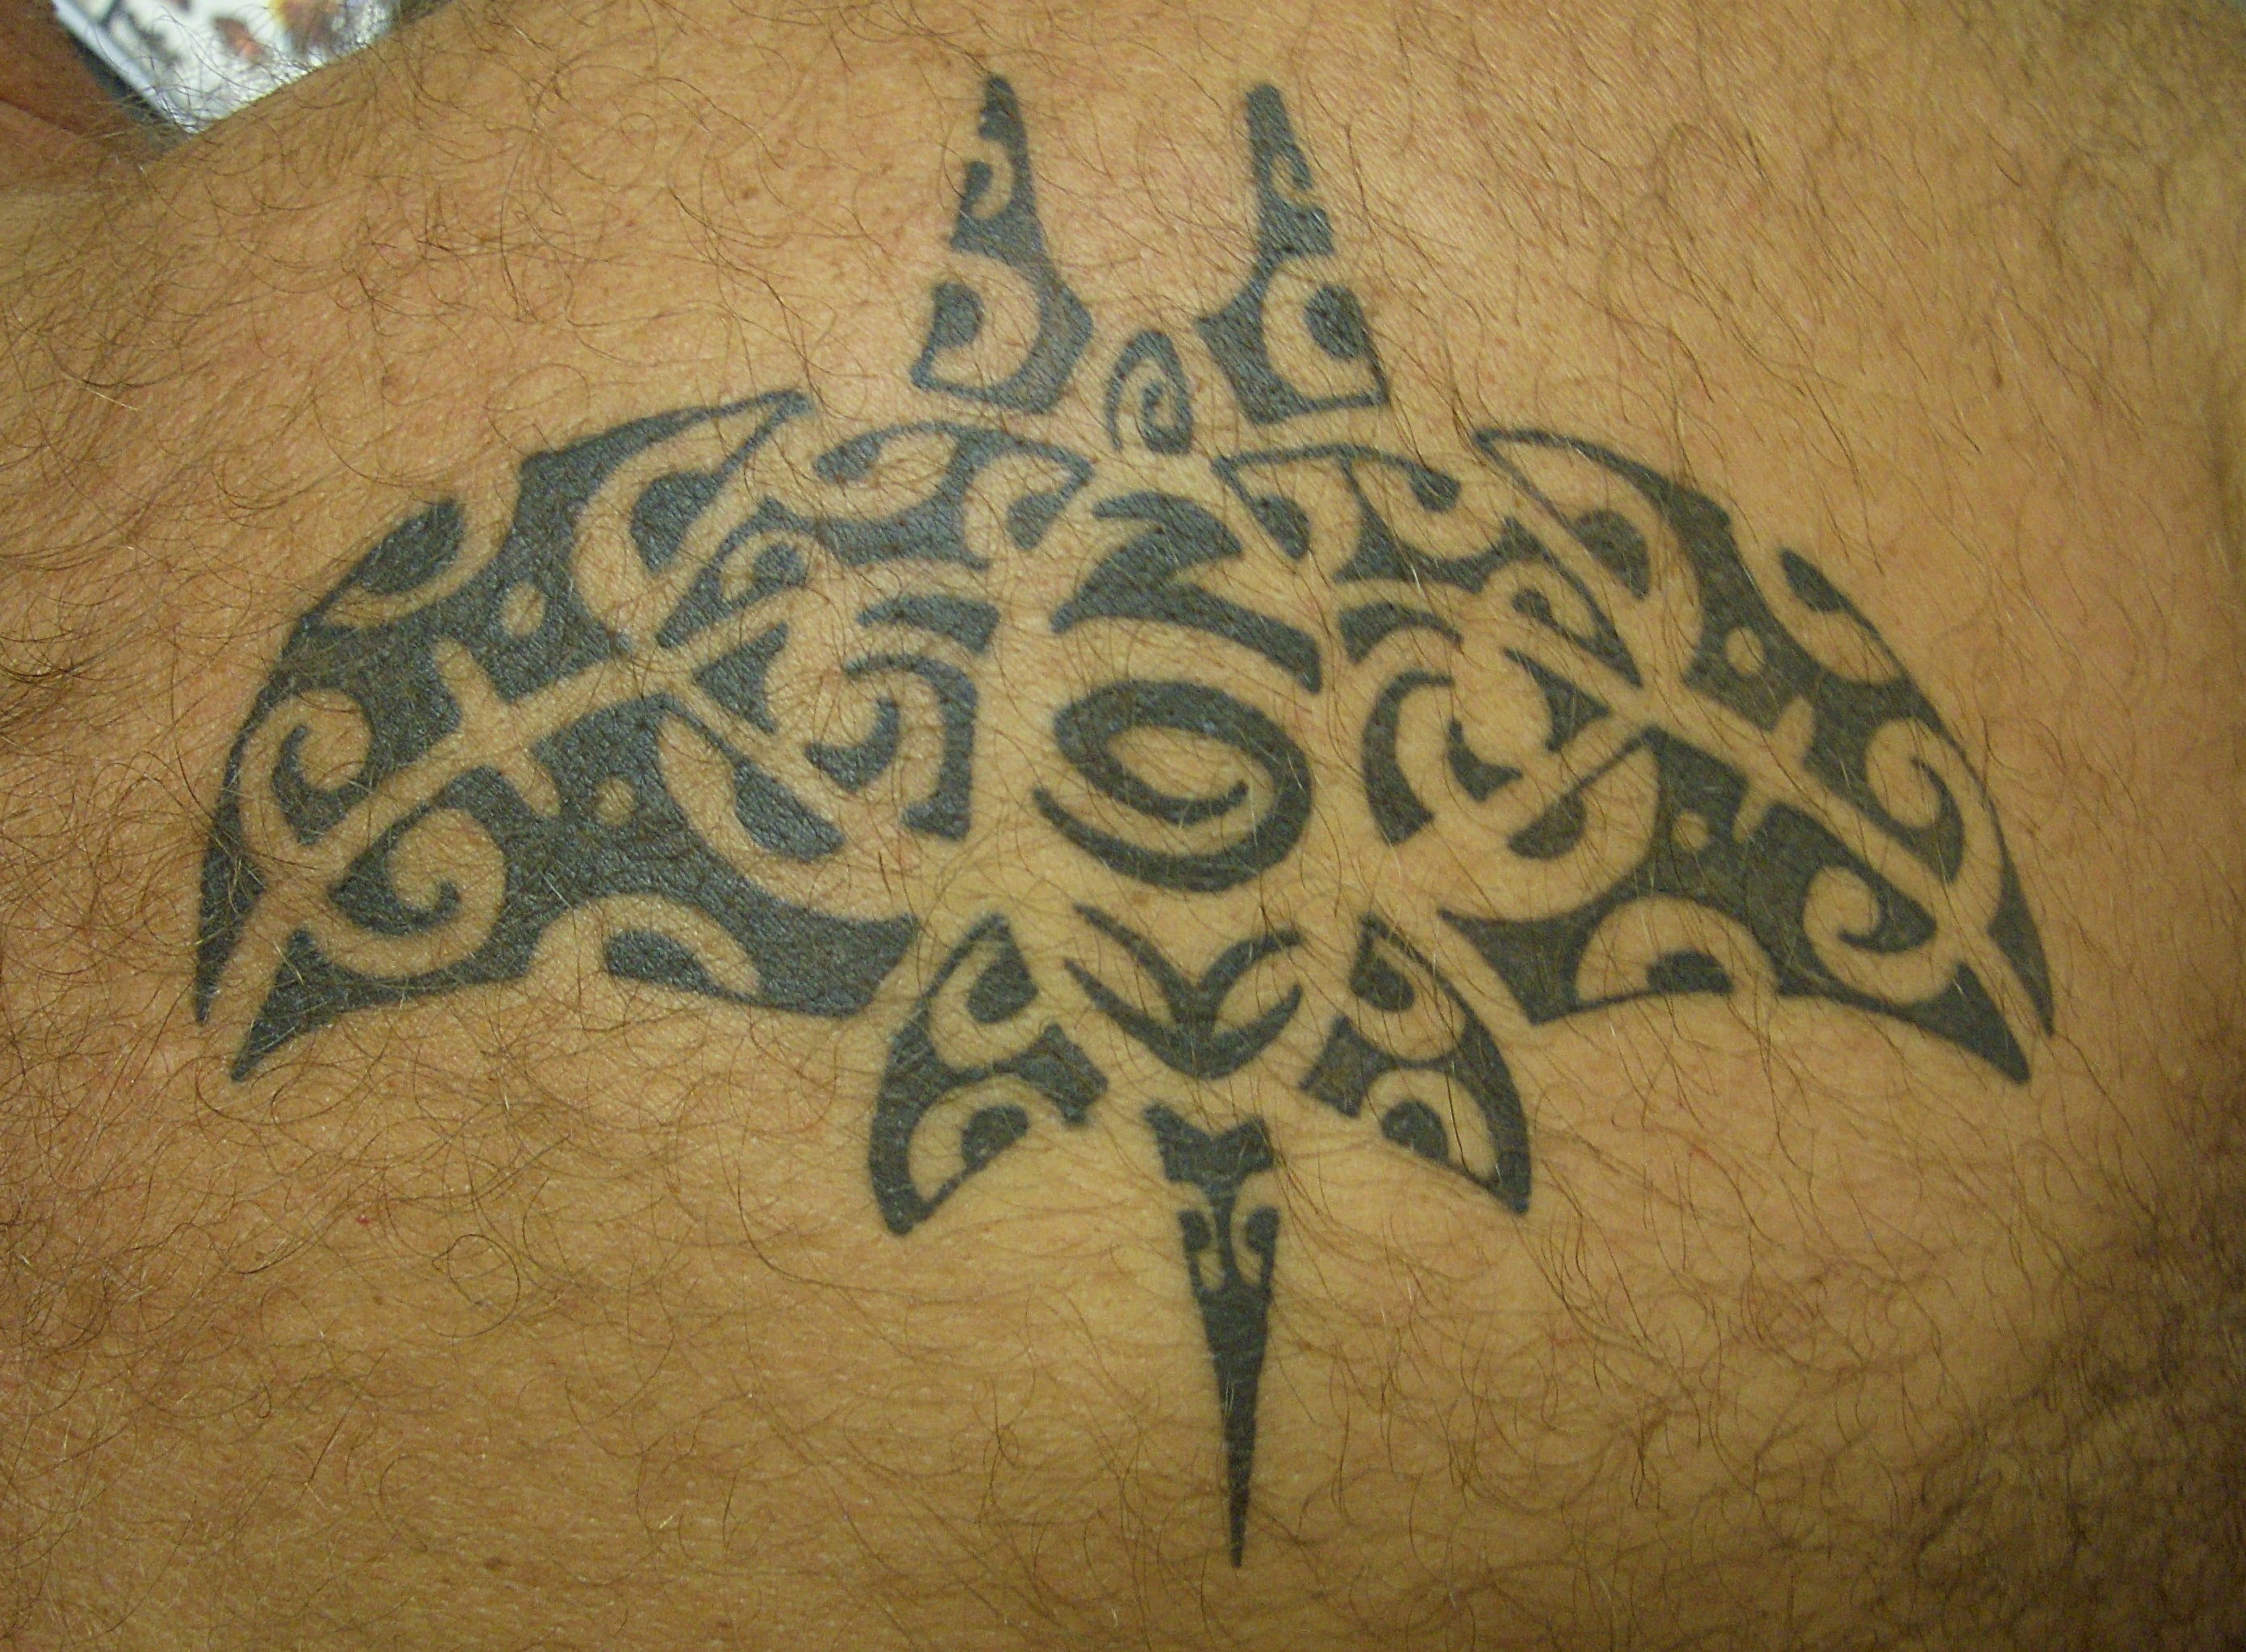 Hawaiian Tattoos  Understanding Their Rich History and Culture  Certified  Tattoo Studios